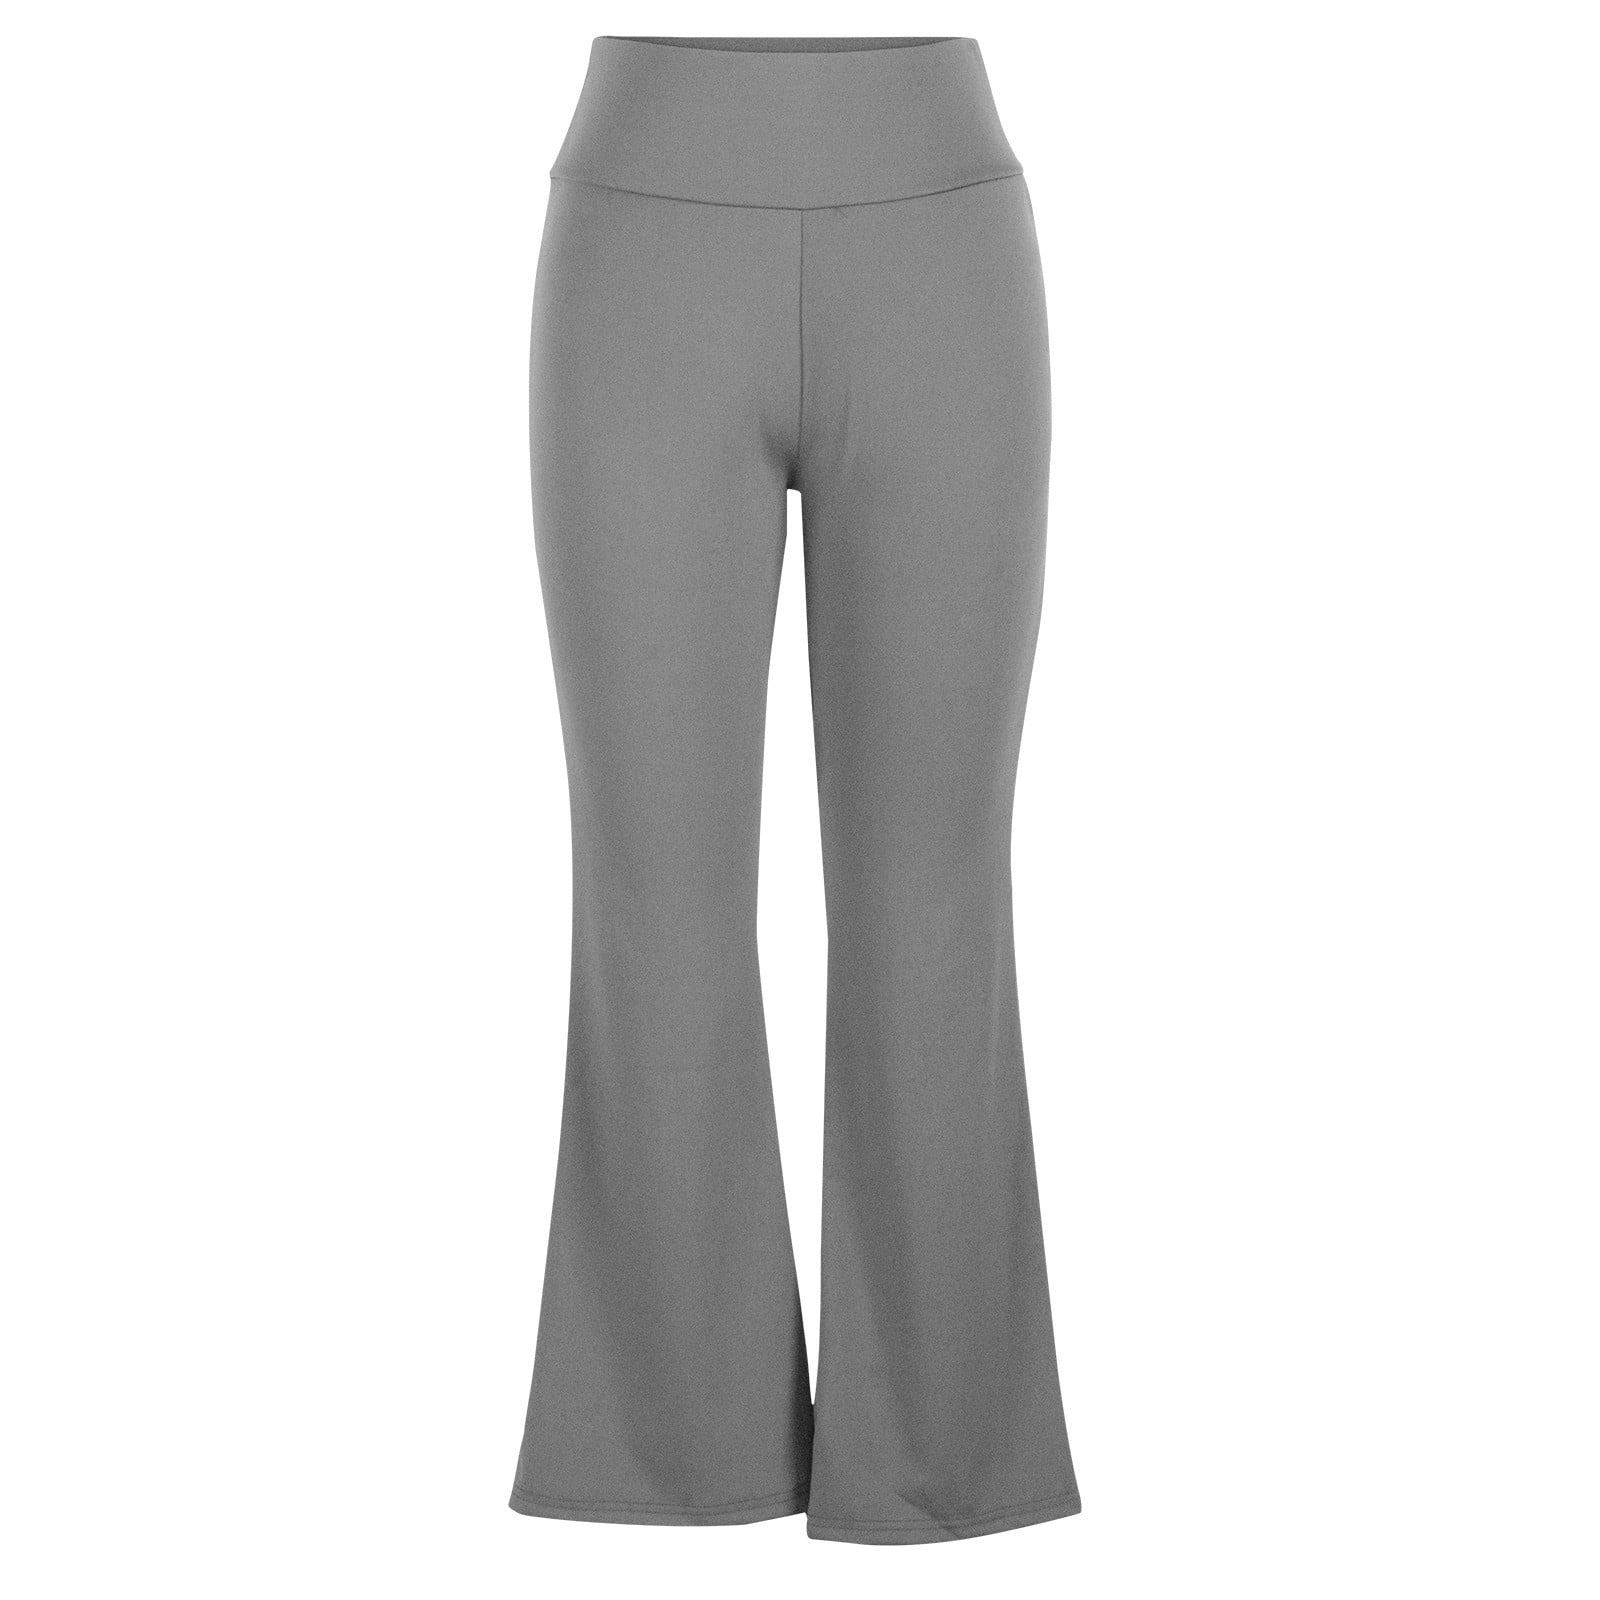 Bigersell Curvy Yoga Pants for Women Yoga Full Length Pants Women